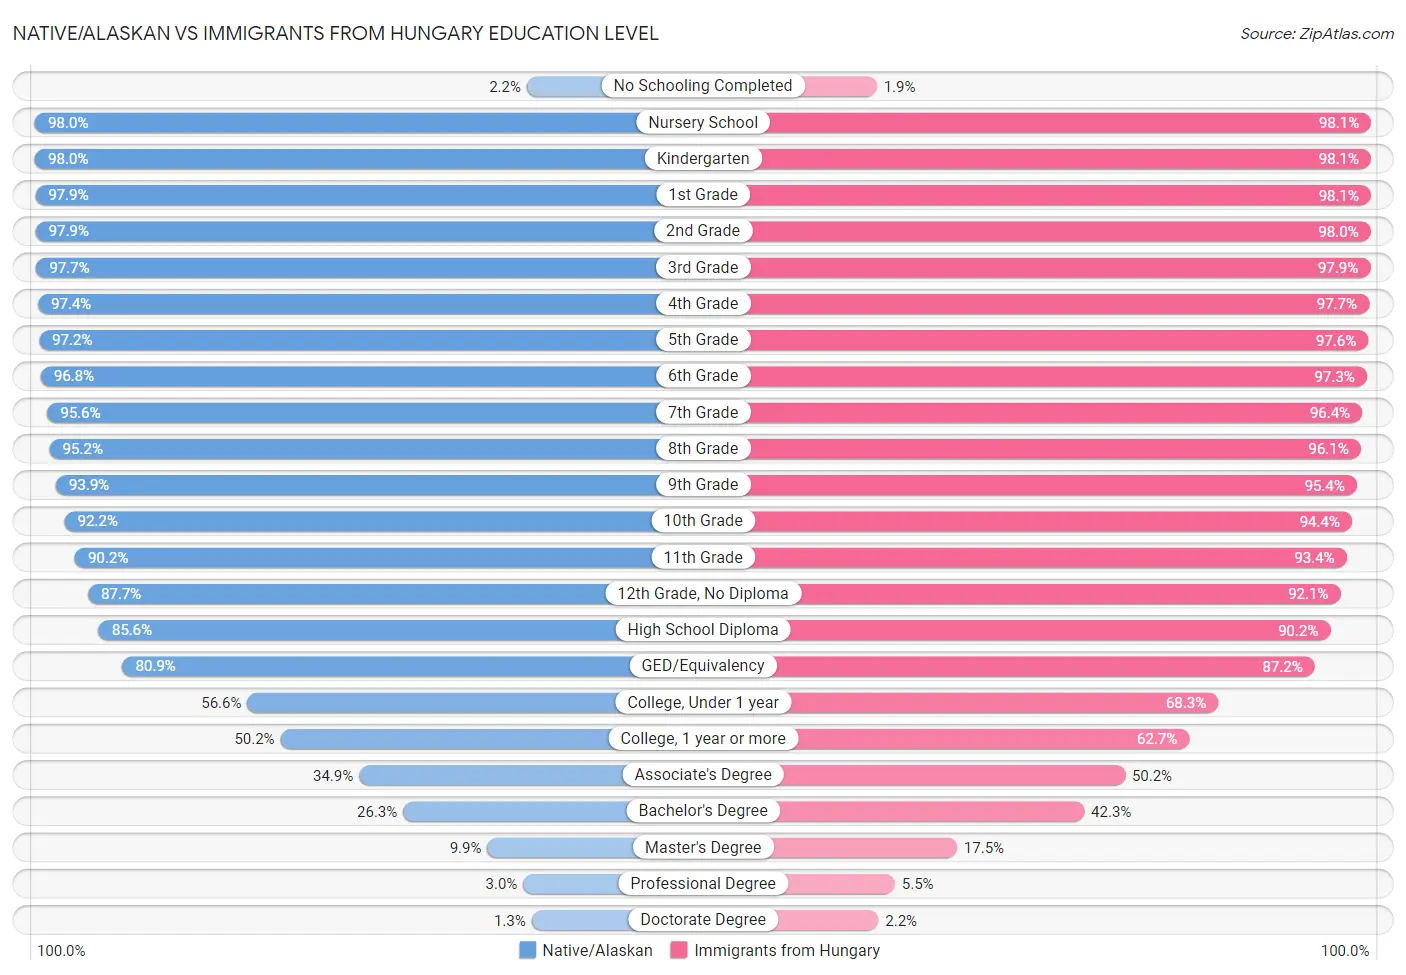 Native/Alaskan vs Immigrants from Hungary Education Level